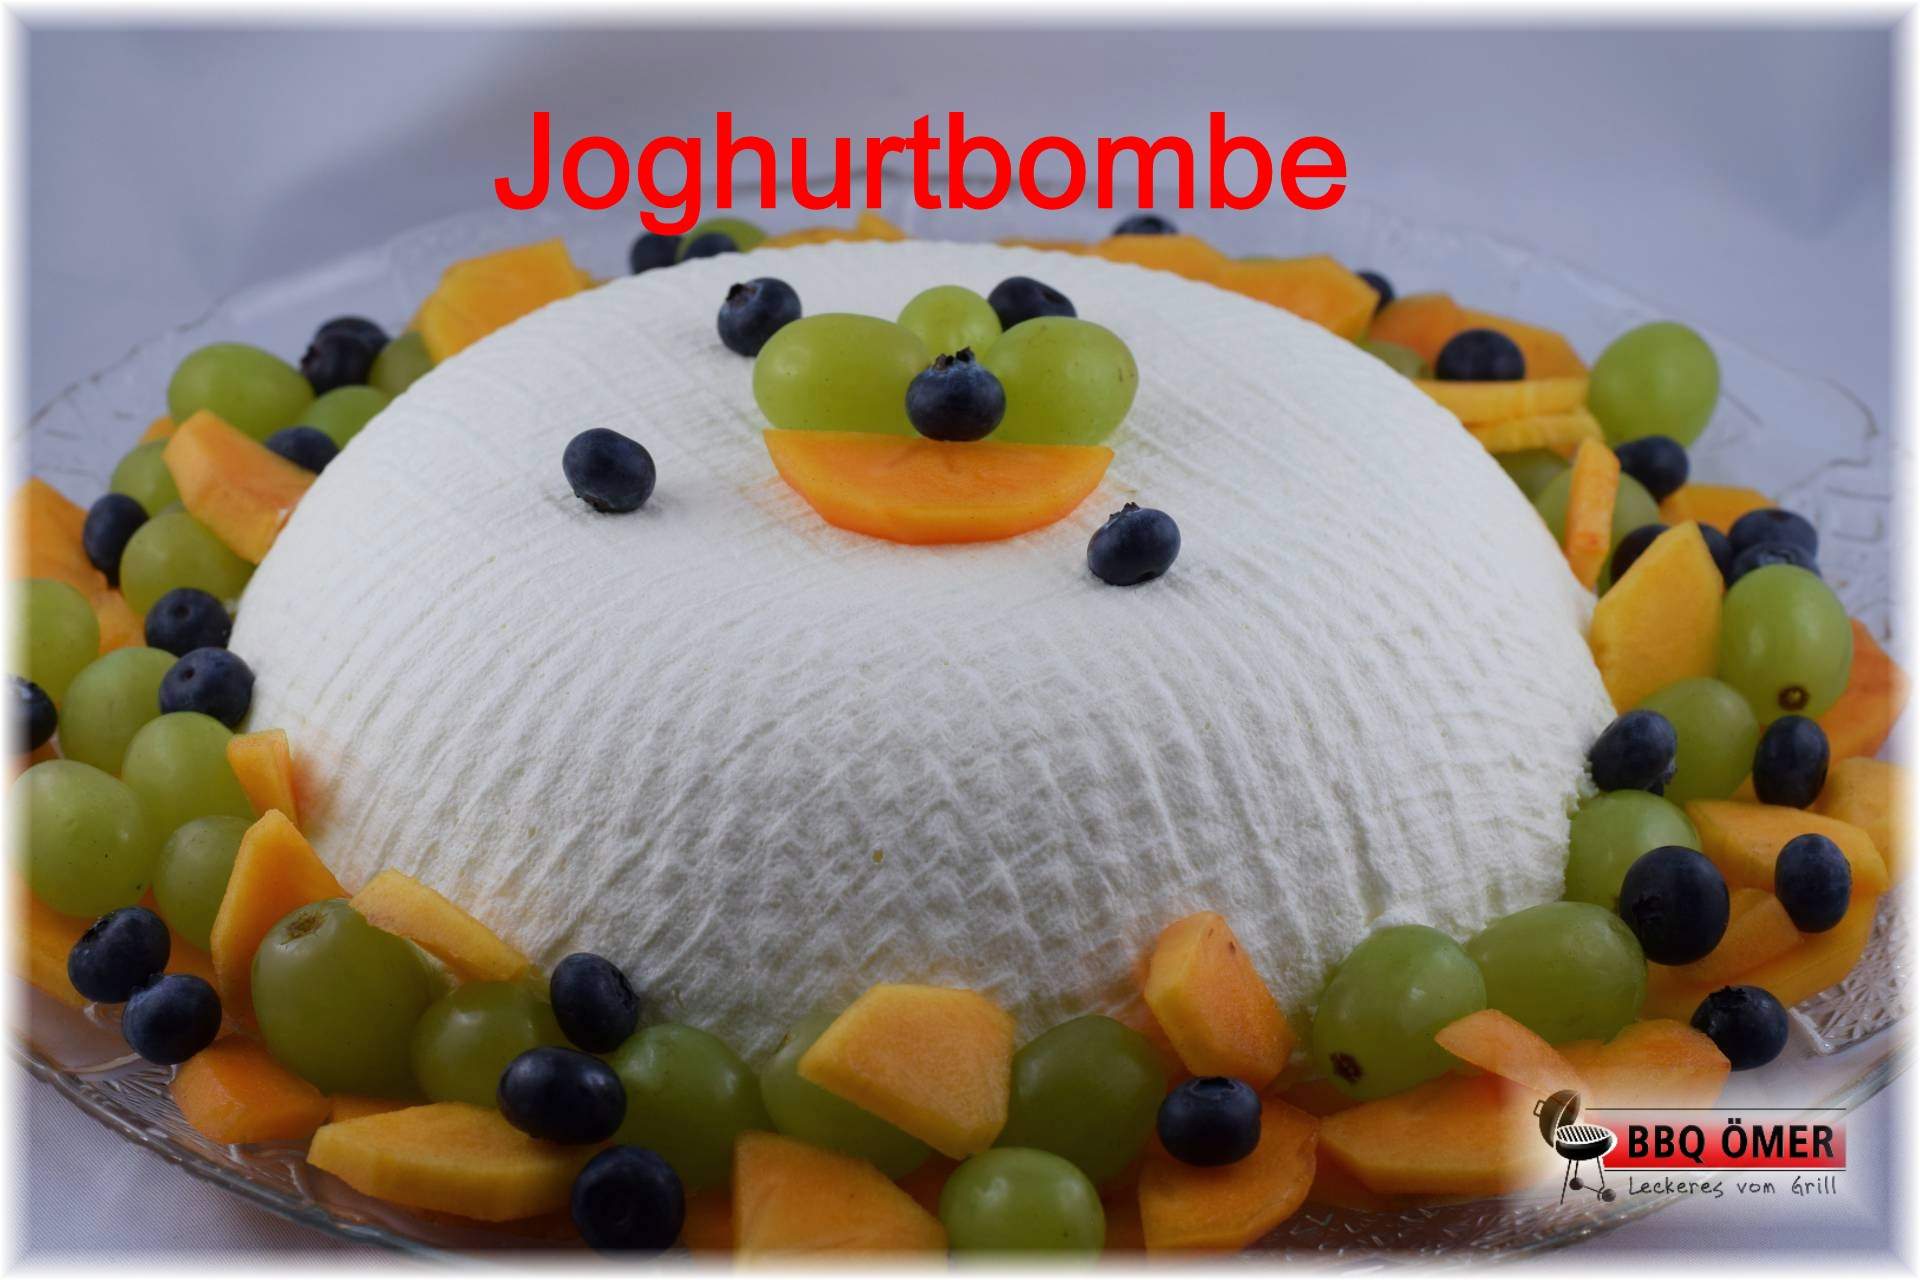 Joghurtbombe